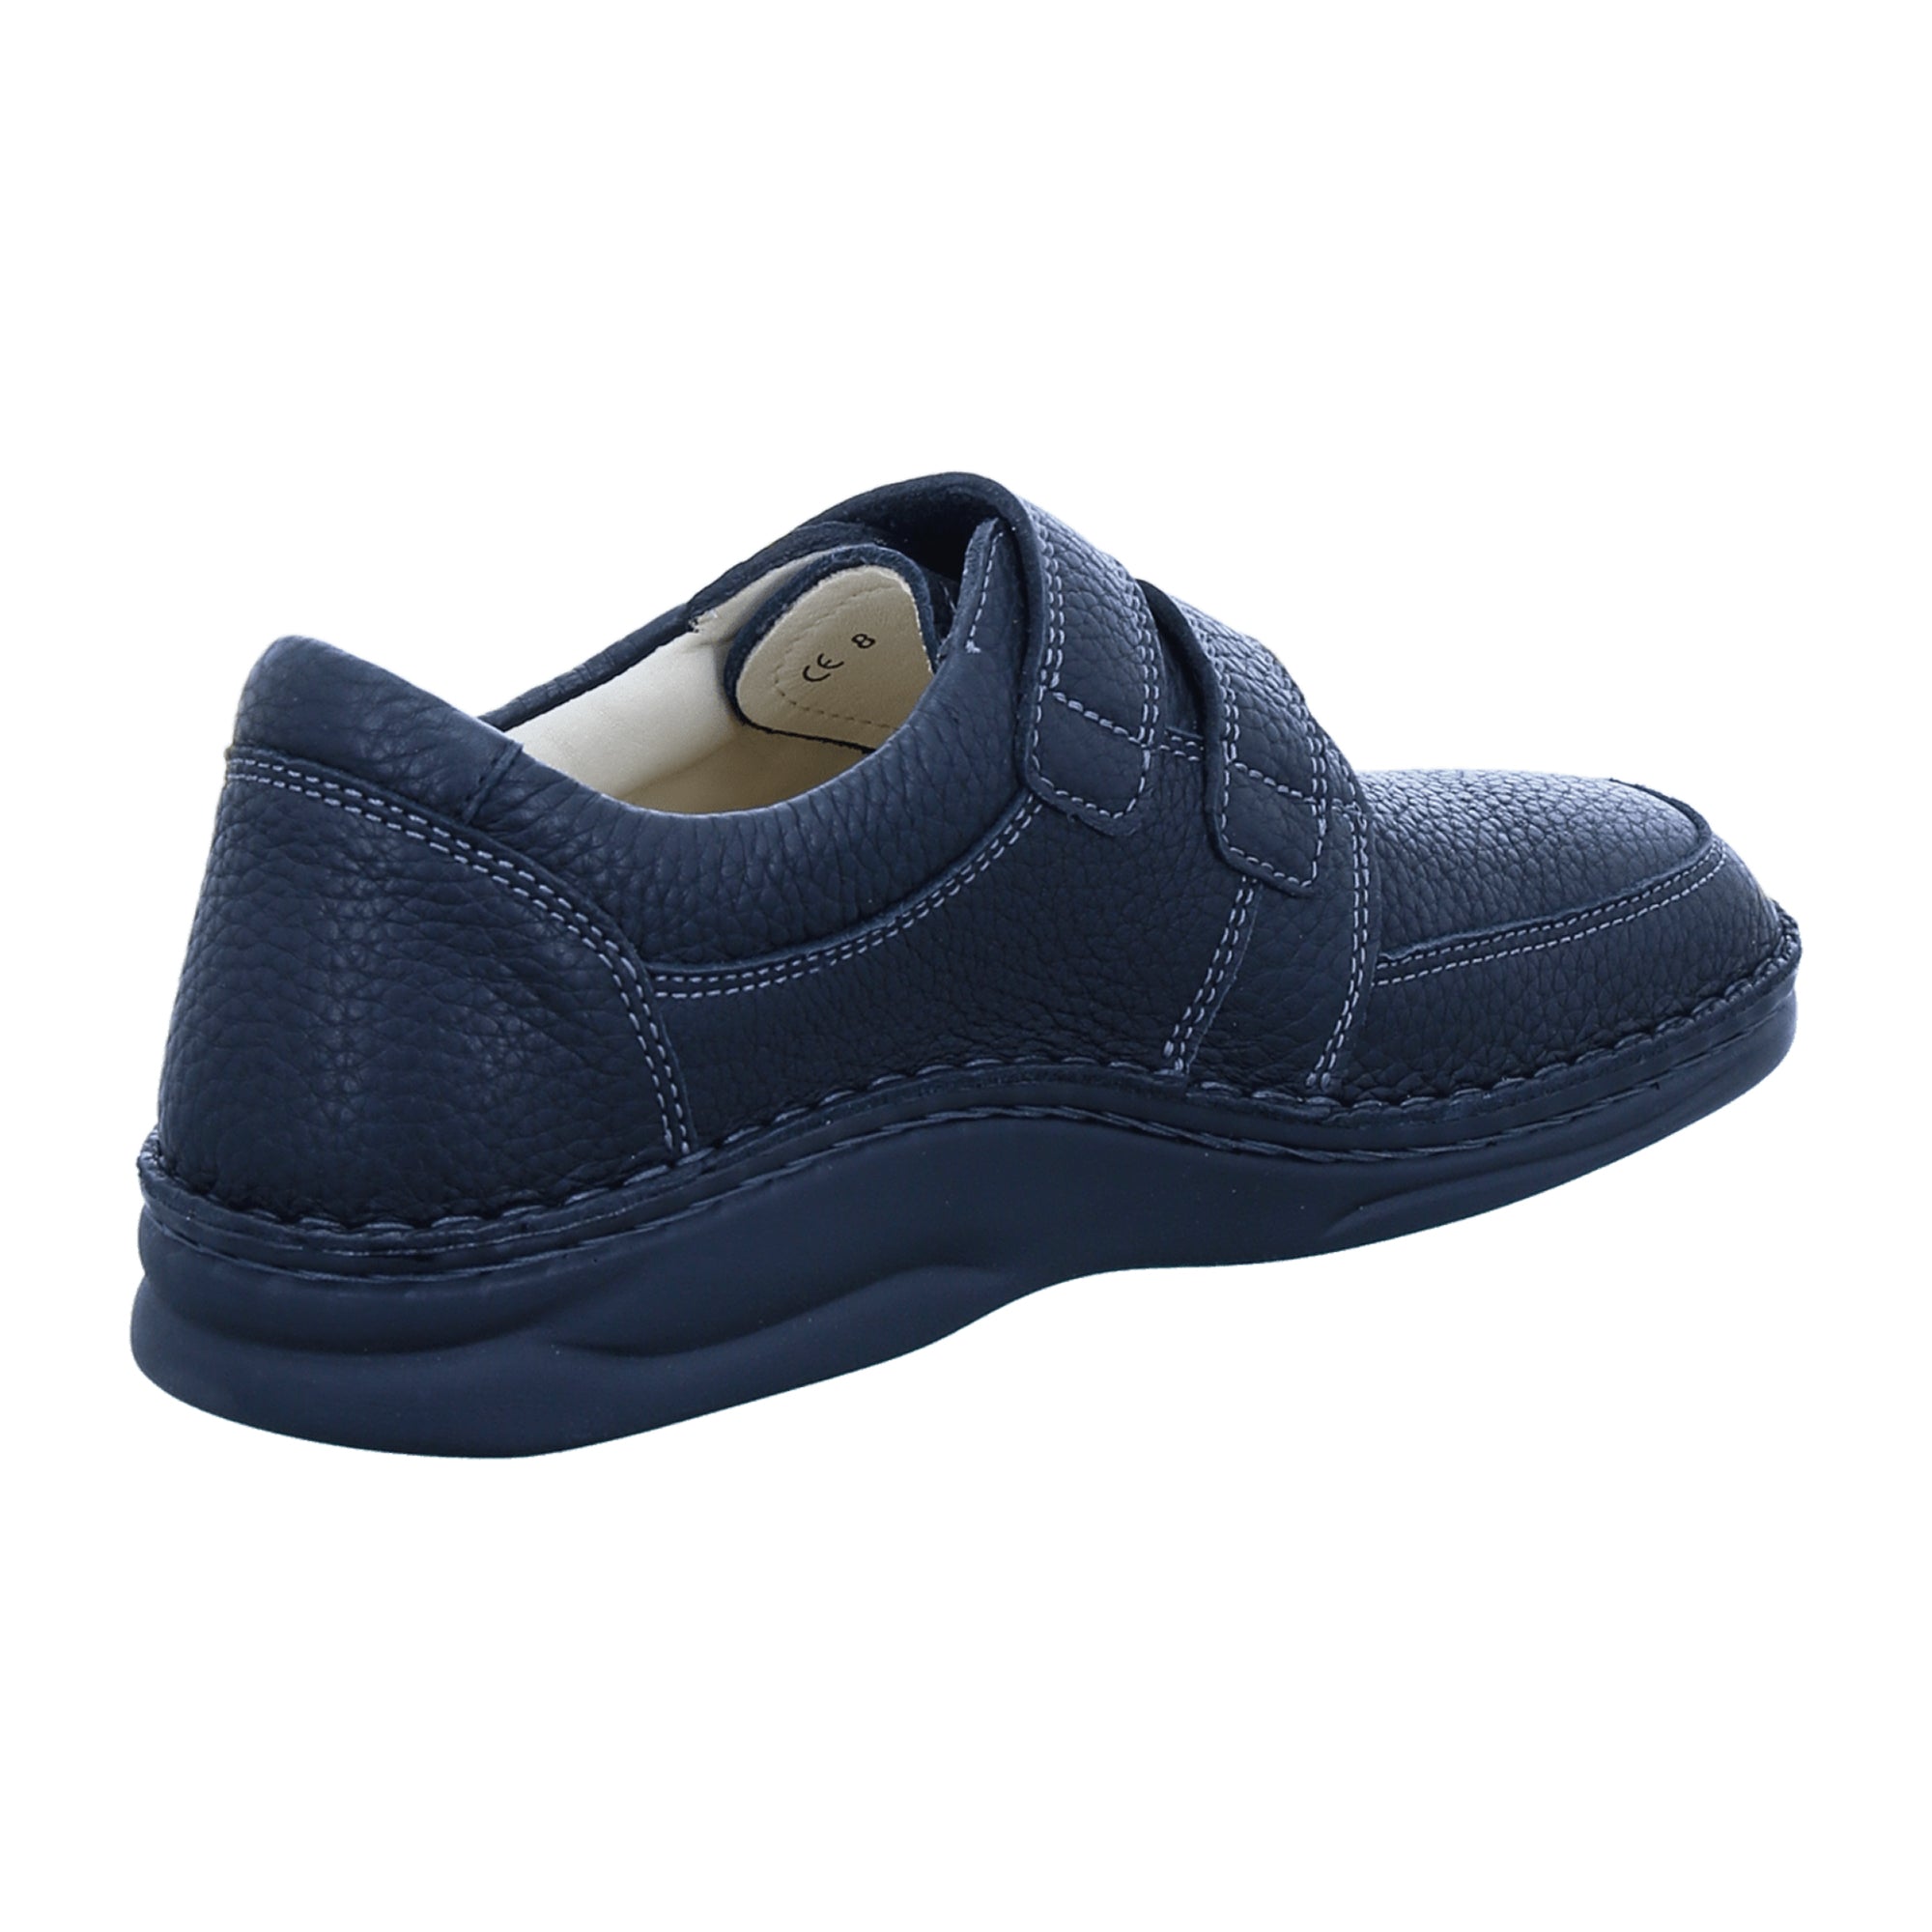 Finn Comfort Wicklow Men's Shoes 01112-650099 in Black - Stylish & Durable